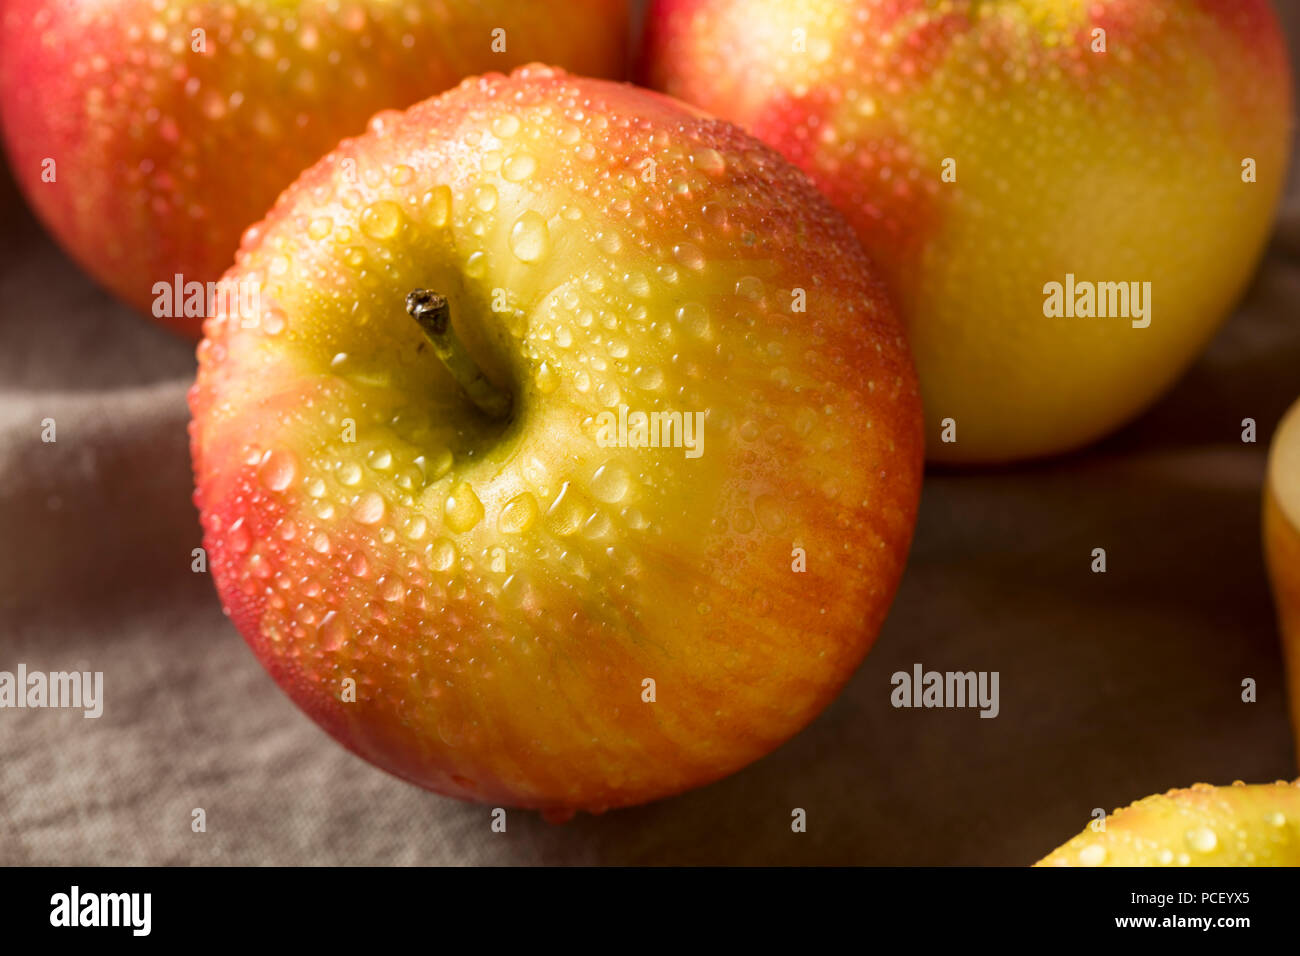 https://c8.alamy.com/comp/PCEYX5/raw-red-organic-honeycrisp-apples-ready-to-eat-PCEYX5.jpg